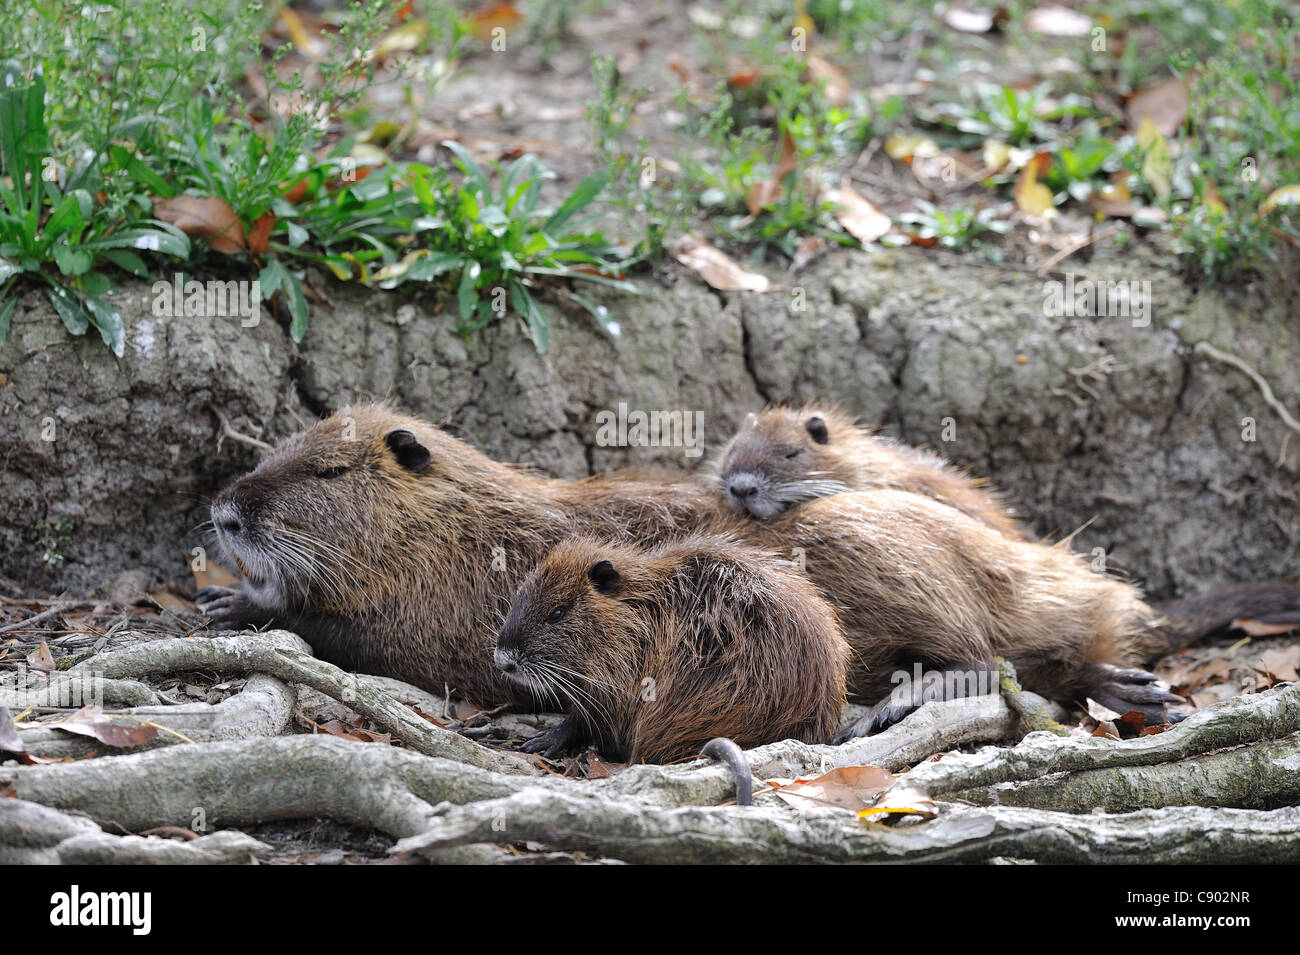 Nutrias - Fluss Ratte - Nutria (Biber brummeln) Familie ruhen im Schatten Stockfoto